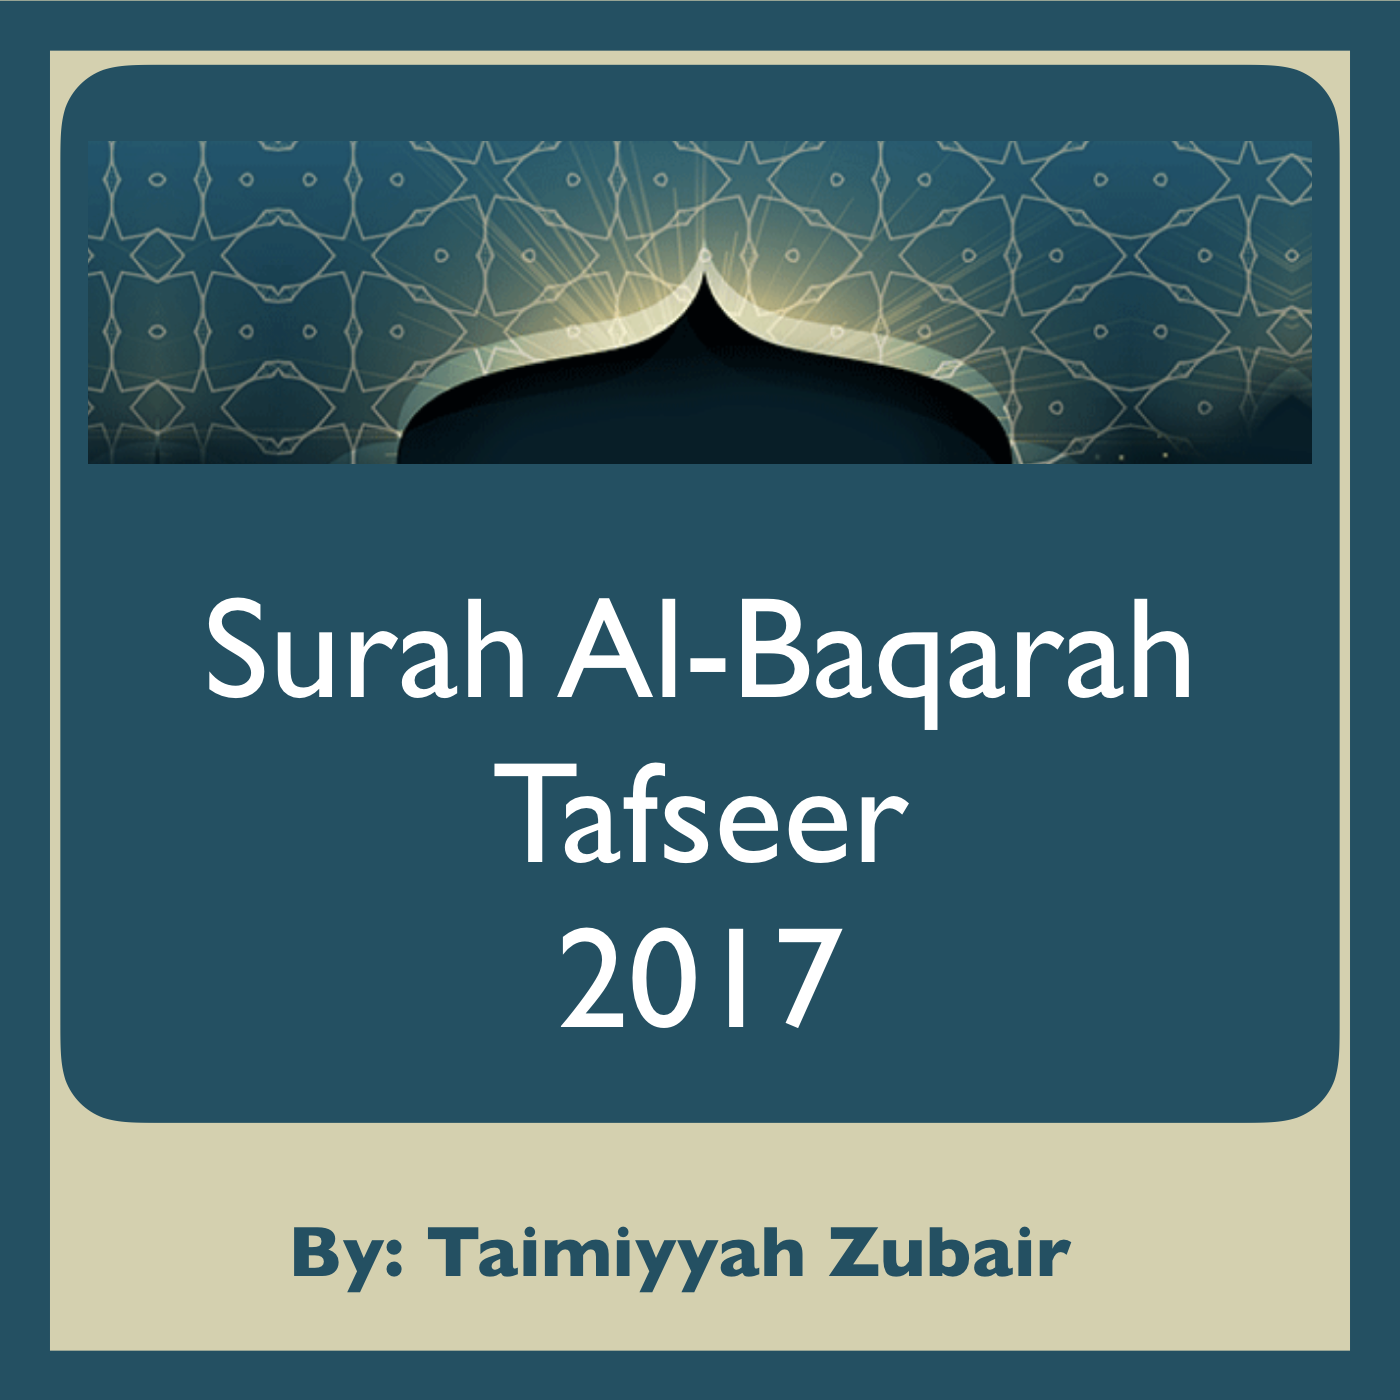 Surah al-Baqarah Podcast - Listen, Reviews, Charts - Chartable